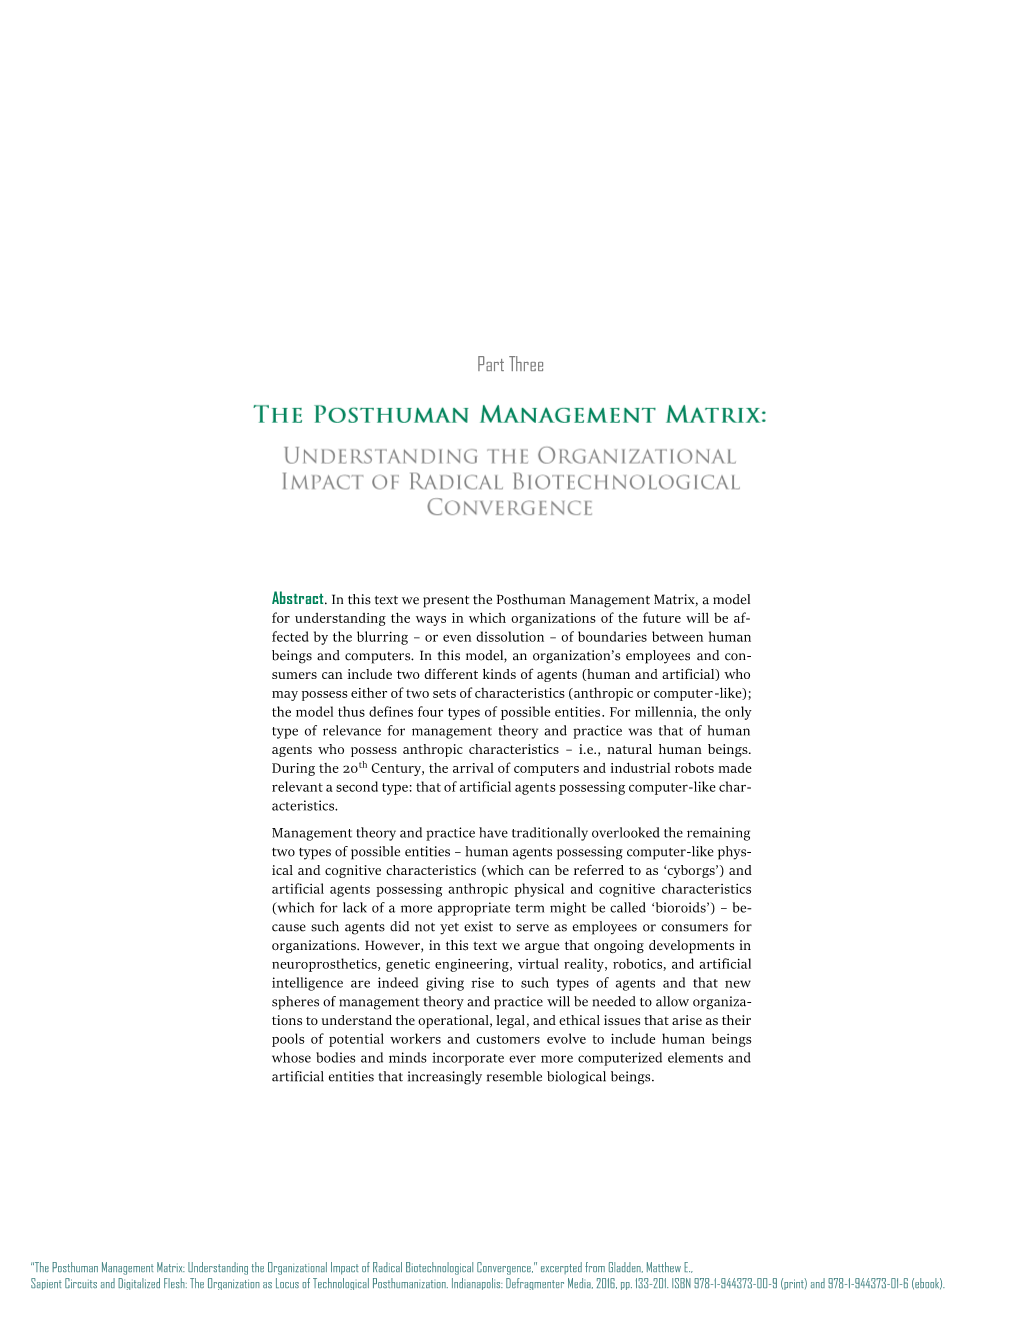 The Posthuman Management Matrix: Understanding the Organizational Impact of Radical Biotechnological Convergence